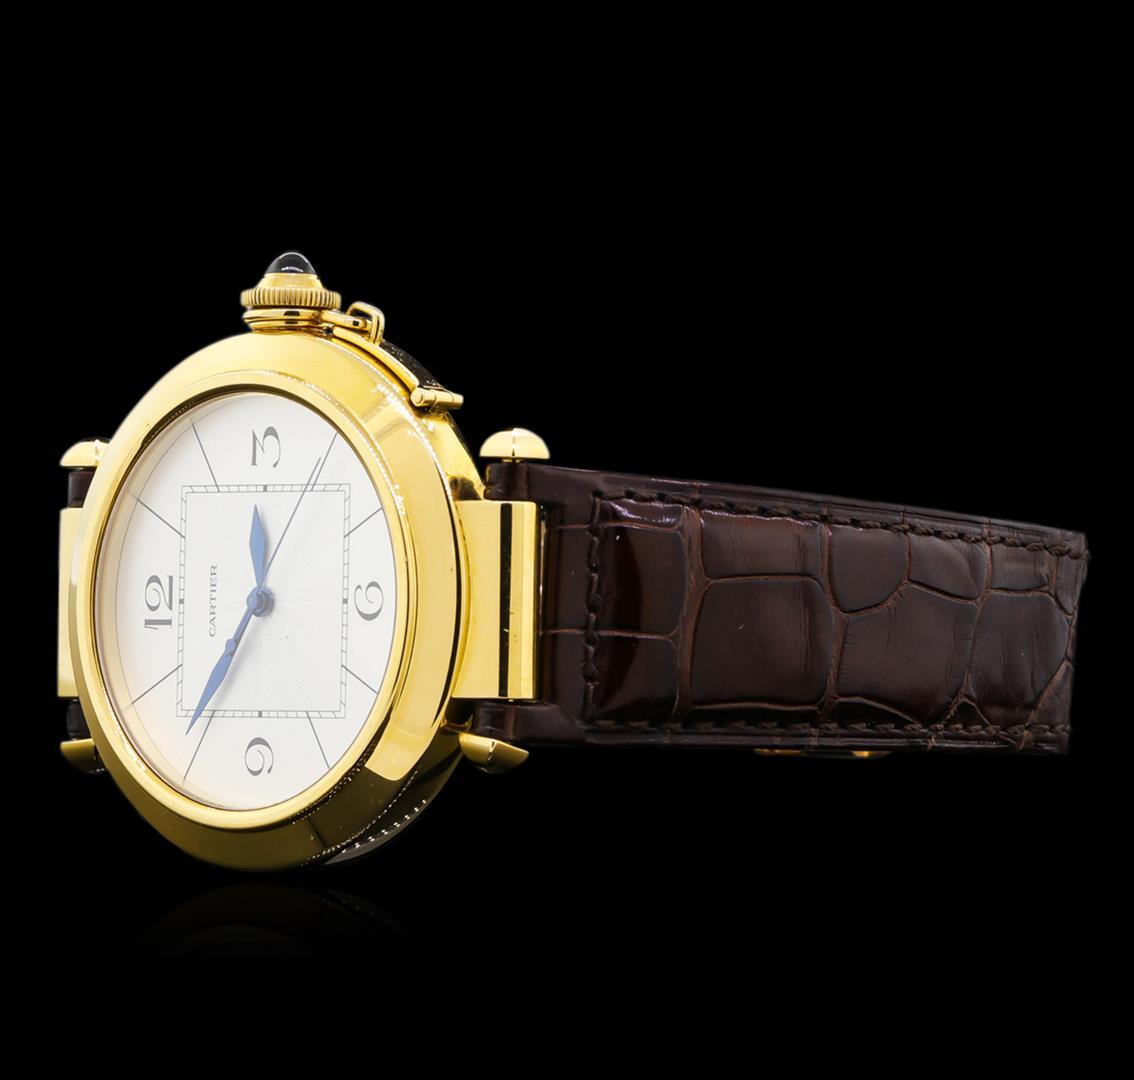 Cartier Pasha Jumbo 18KT Yellow Gold Watch